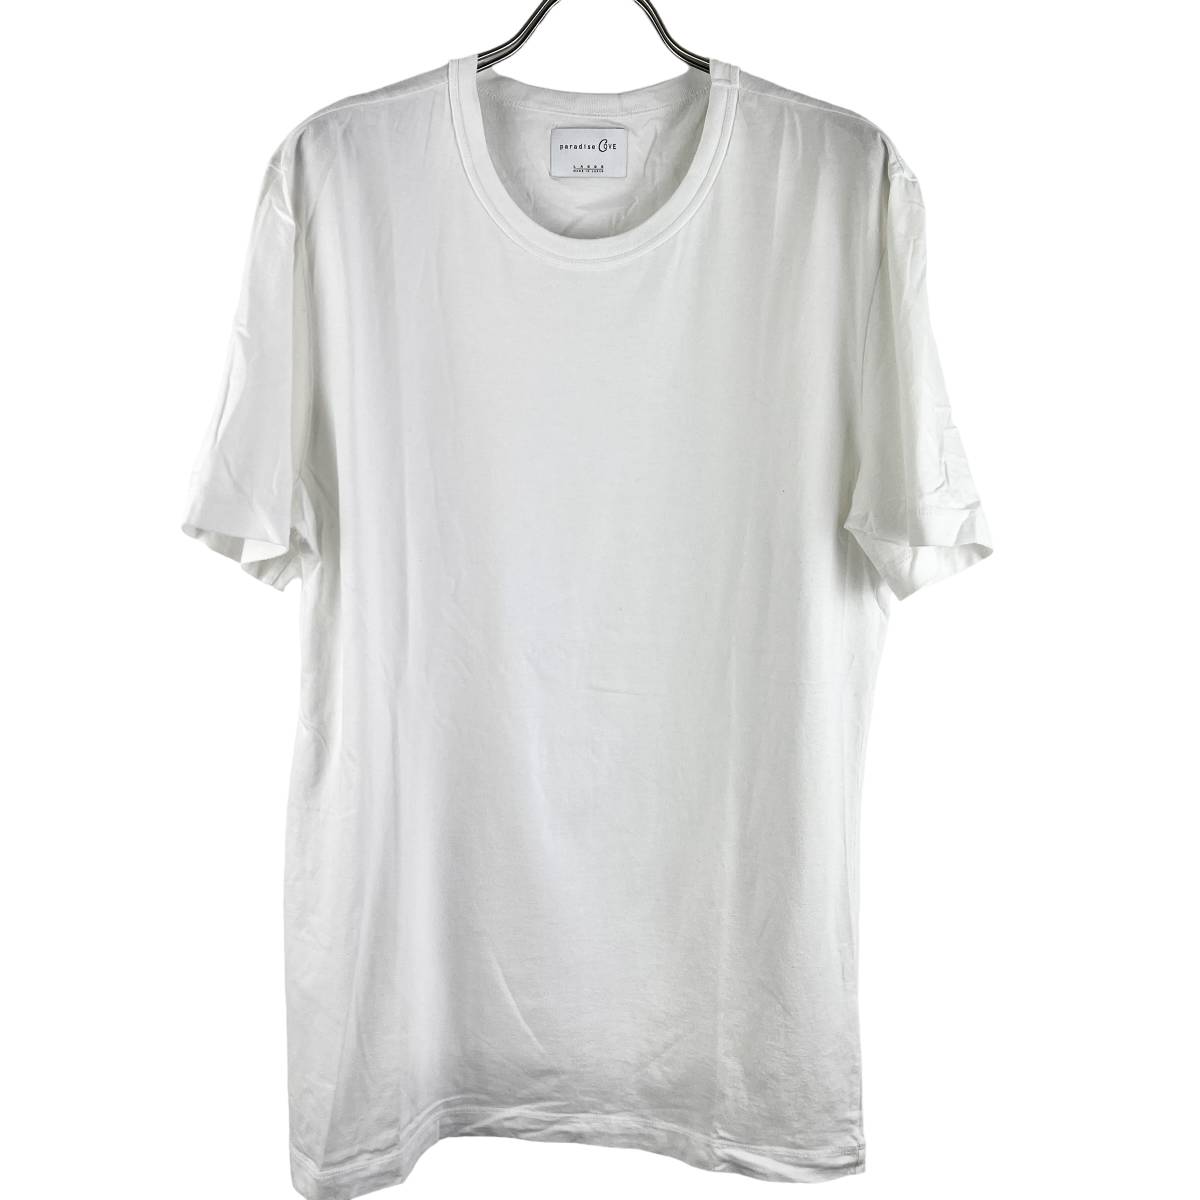 Paradise Love (パラダイスラブ) Cotton Shortsleeve T Shirt (white)